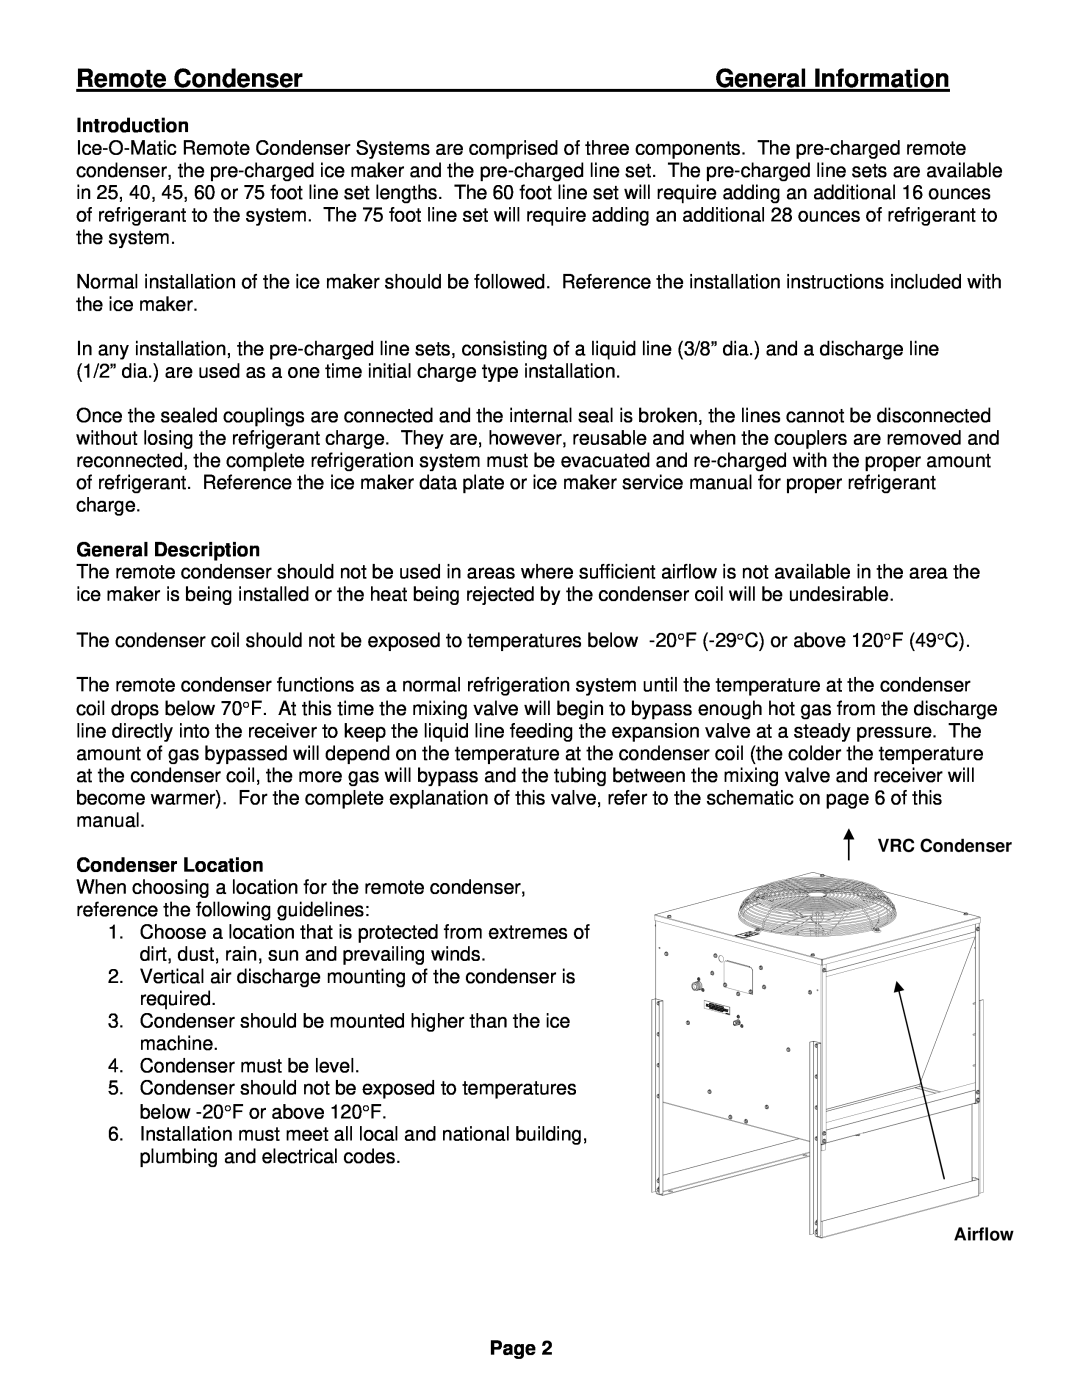 Ice-O-Matic VRC manual Remote Condenser, General Information, Introduction, General Description, Condenser Location, Page 